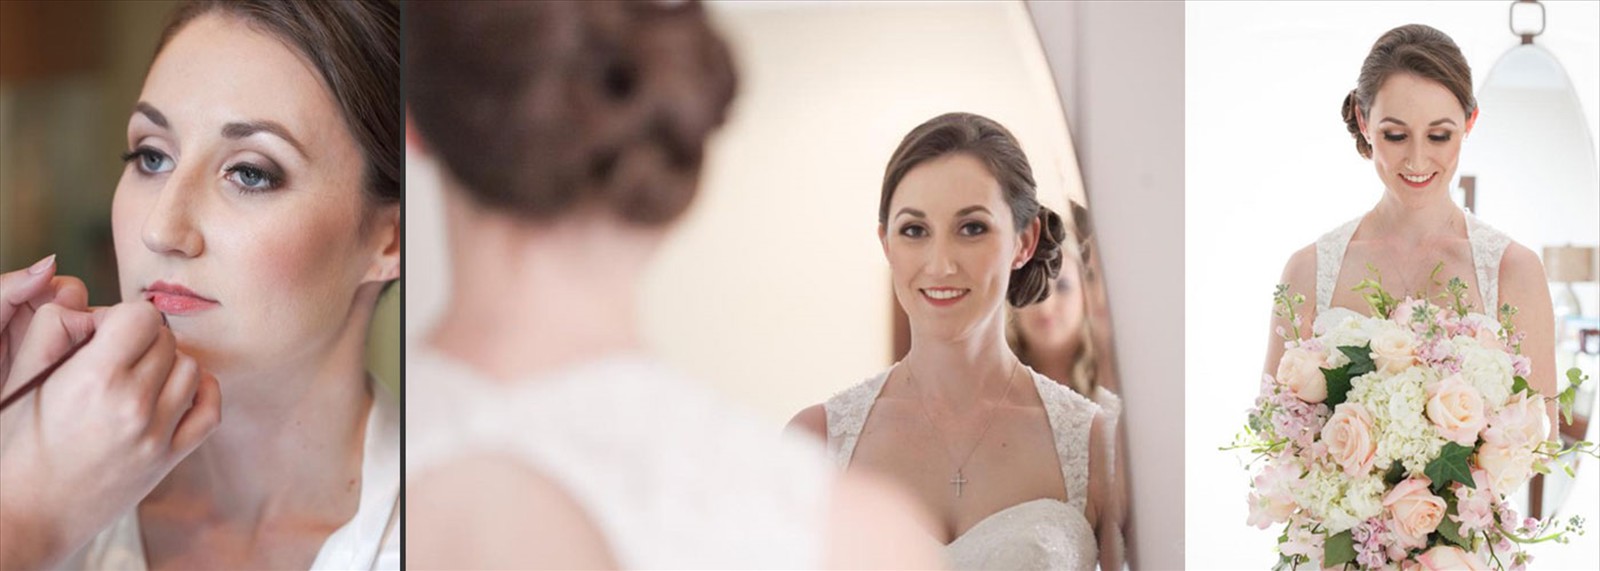 Bridal Hair & Makeup Artist Tampa – Mobile Salon for Weddings